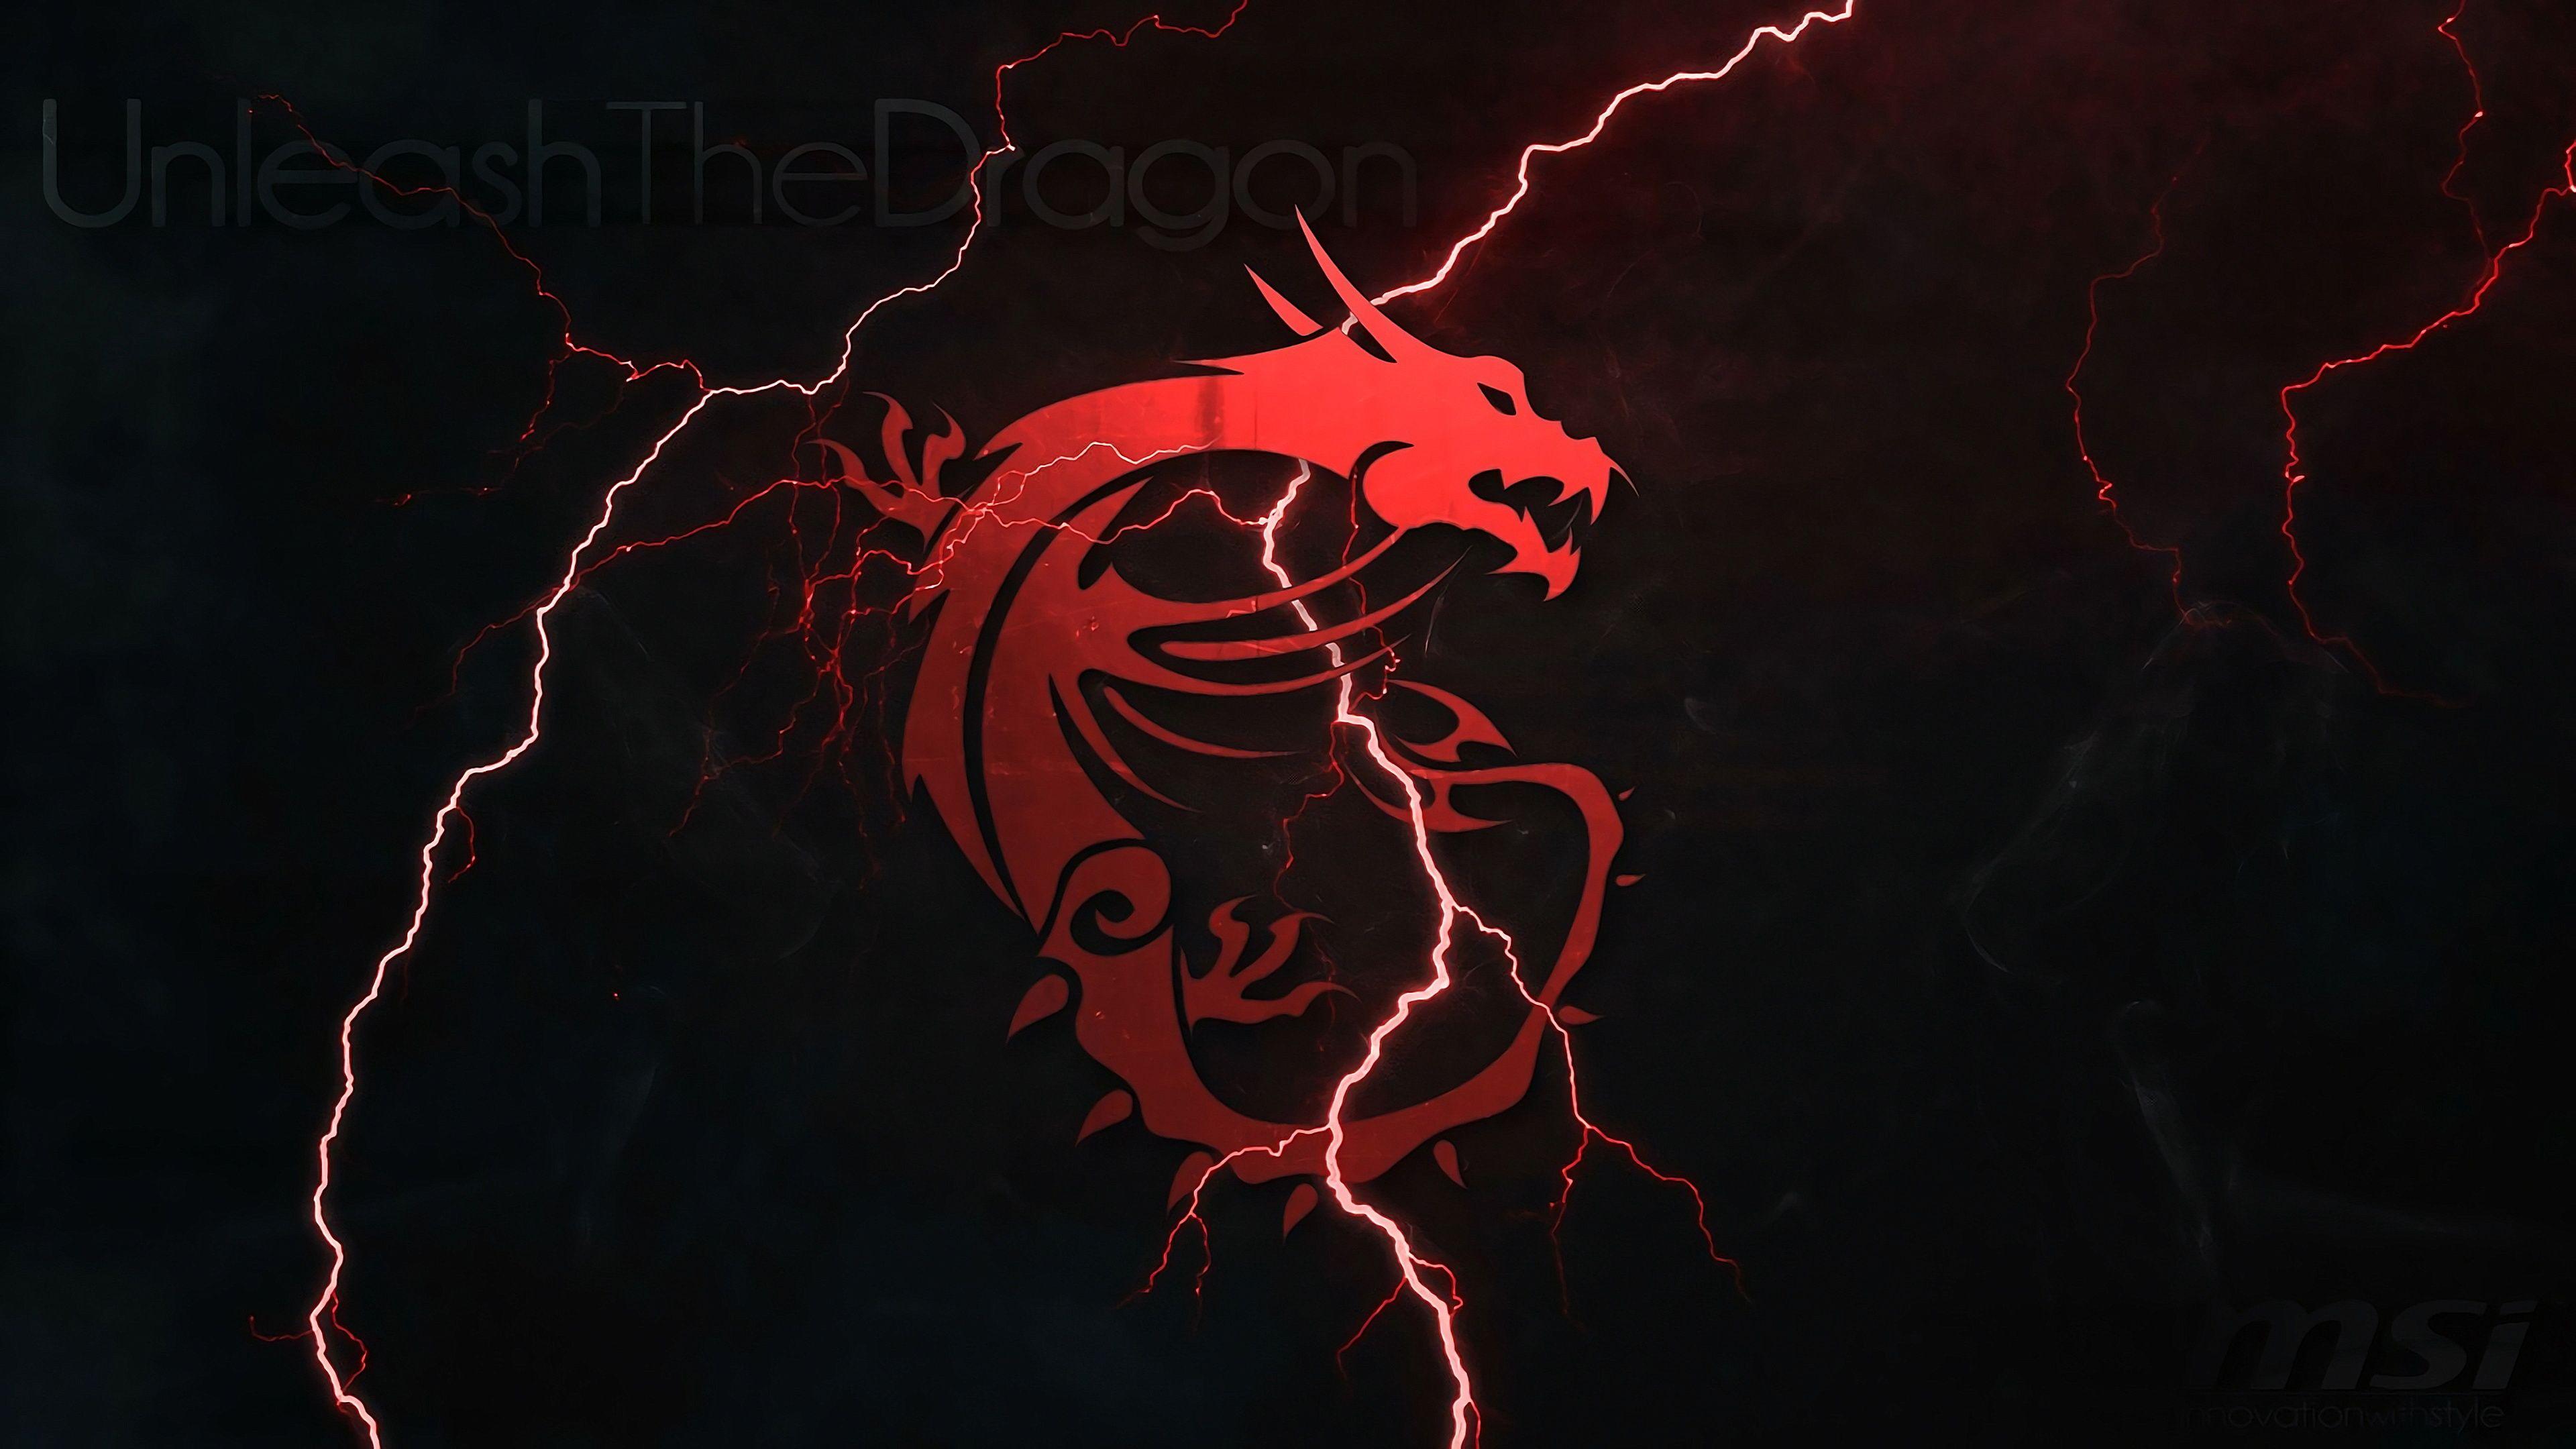 MSI Dragon Logo Lightning 4k wallpaper